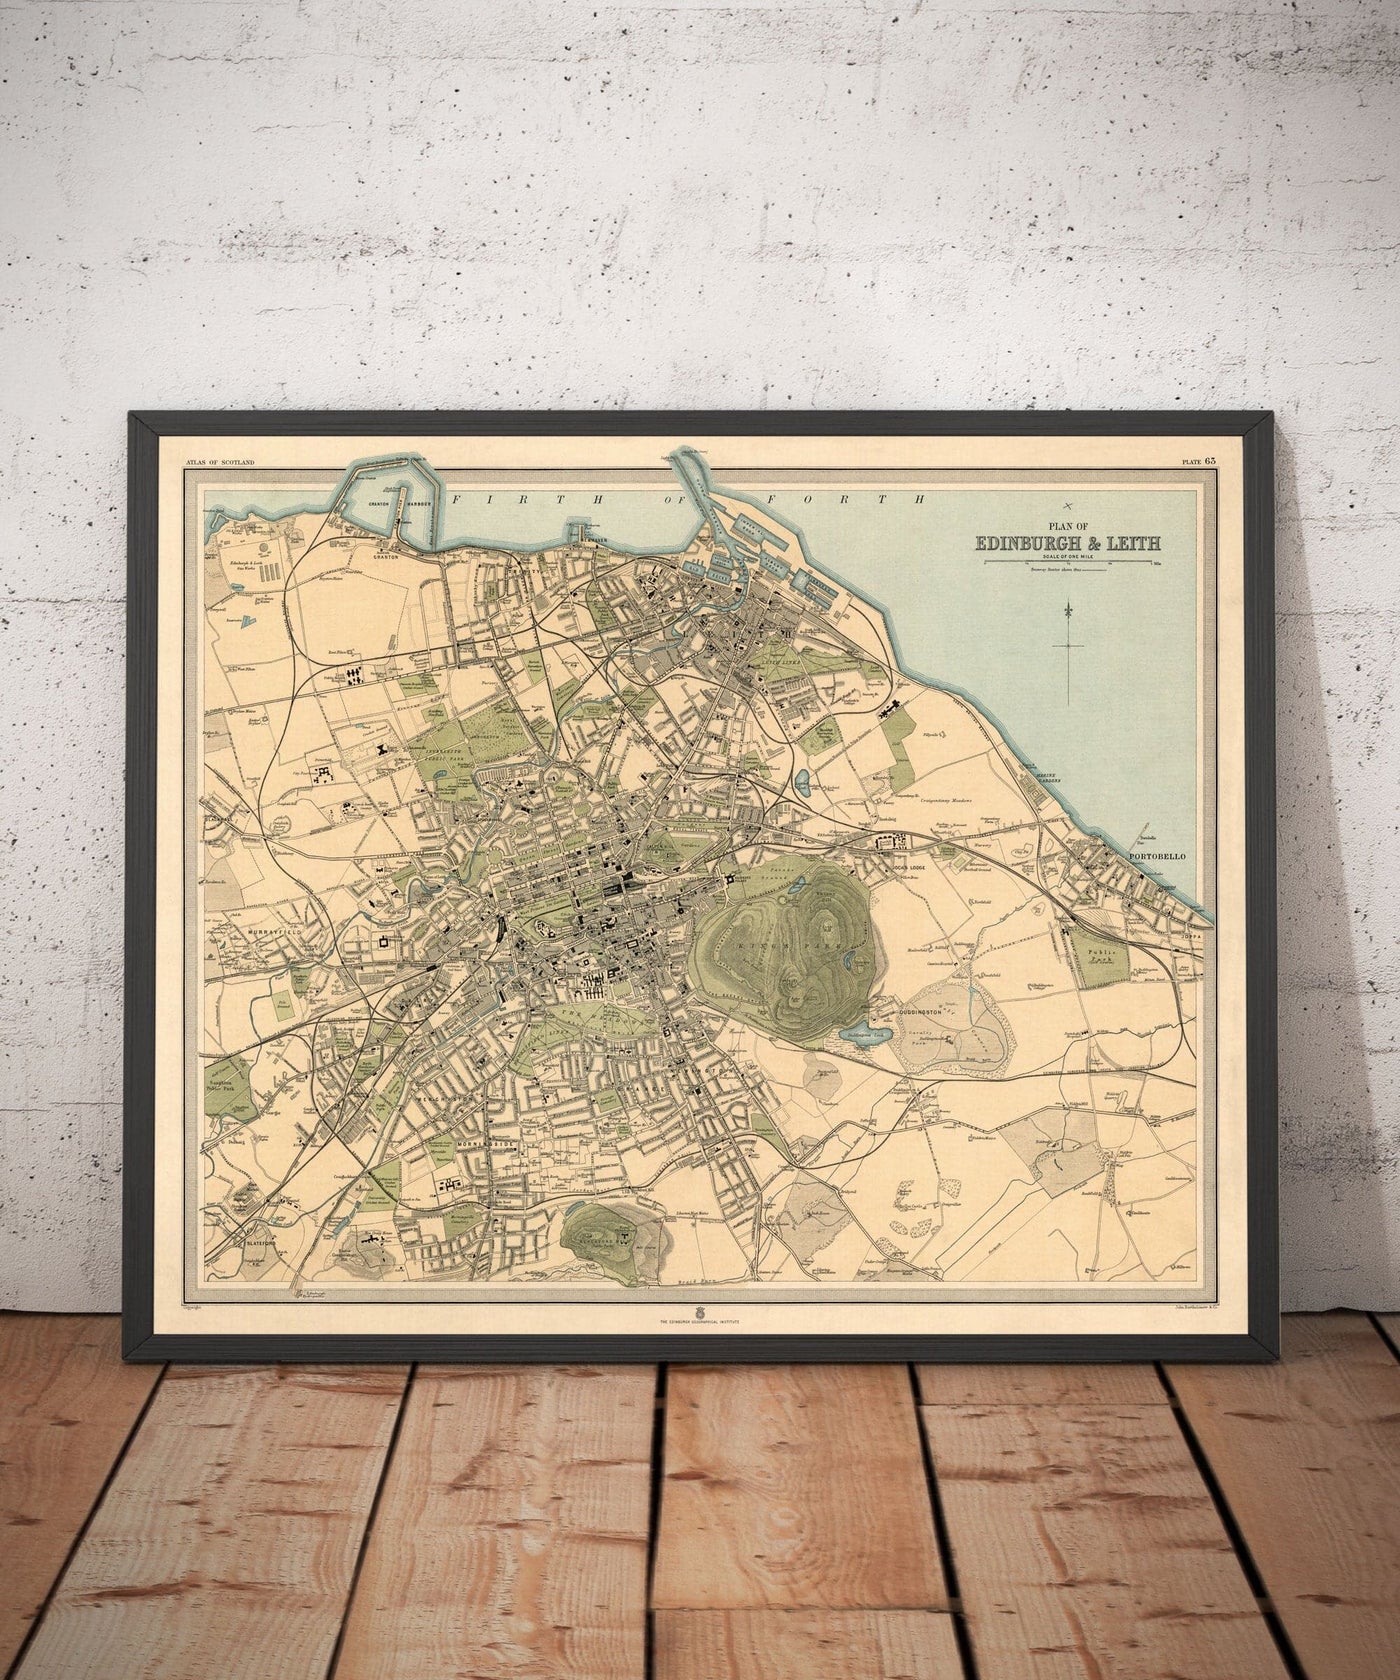 Alte Karte von Edinburgh 1912 von J Bartholomew - Leith, Murrayfield, Portobello, Holyrout